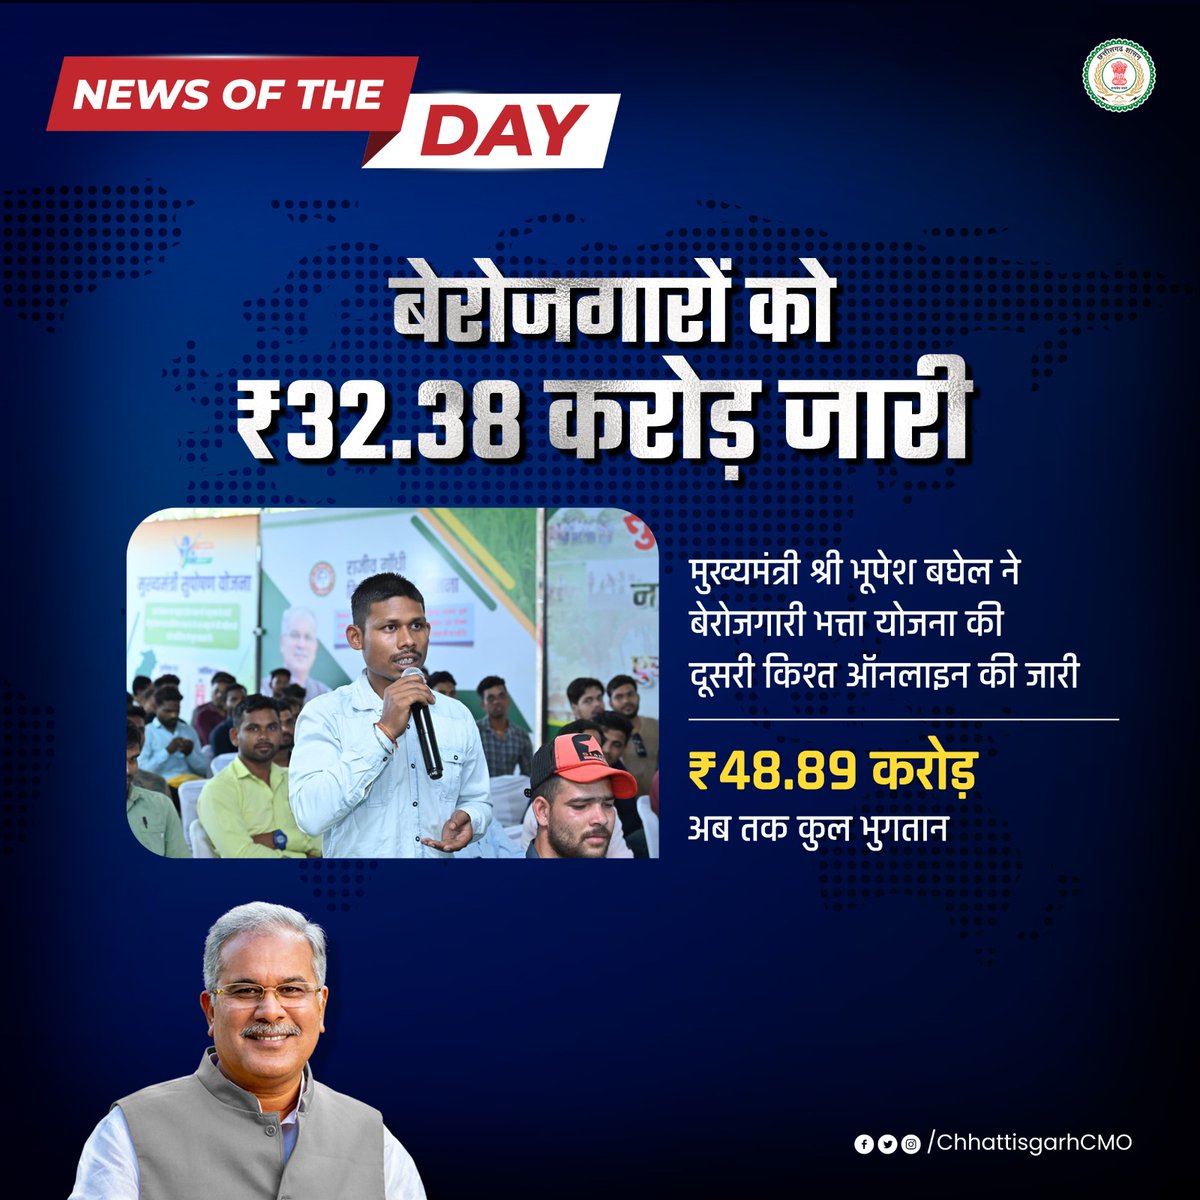 #NewsOfTheDay
बेरोजगारों को ₹32.38 करोड़ जारी

#positivenews #Chhattisgarh
#CGModel
#छत्तीसगढ़_सरकार_भरोसे_की_सरकार
@bhupeshbaghel